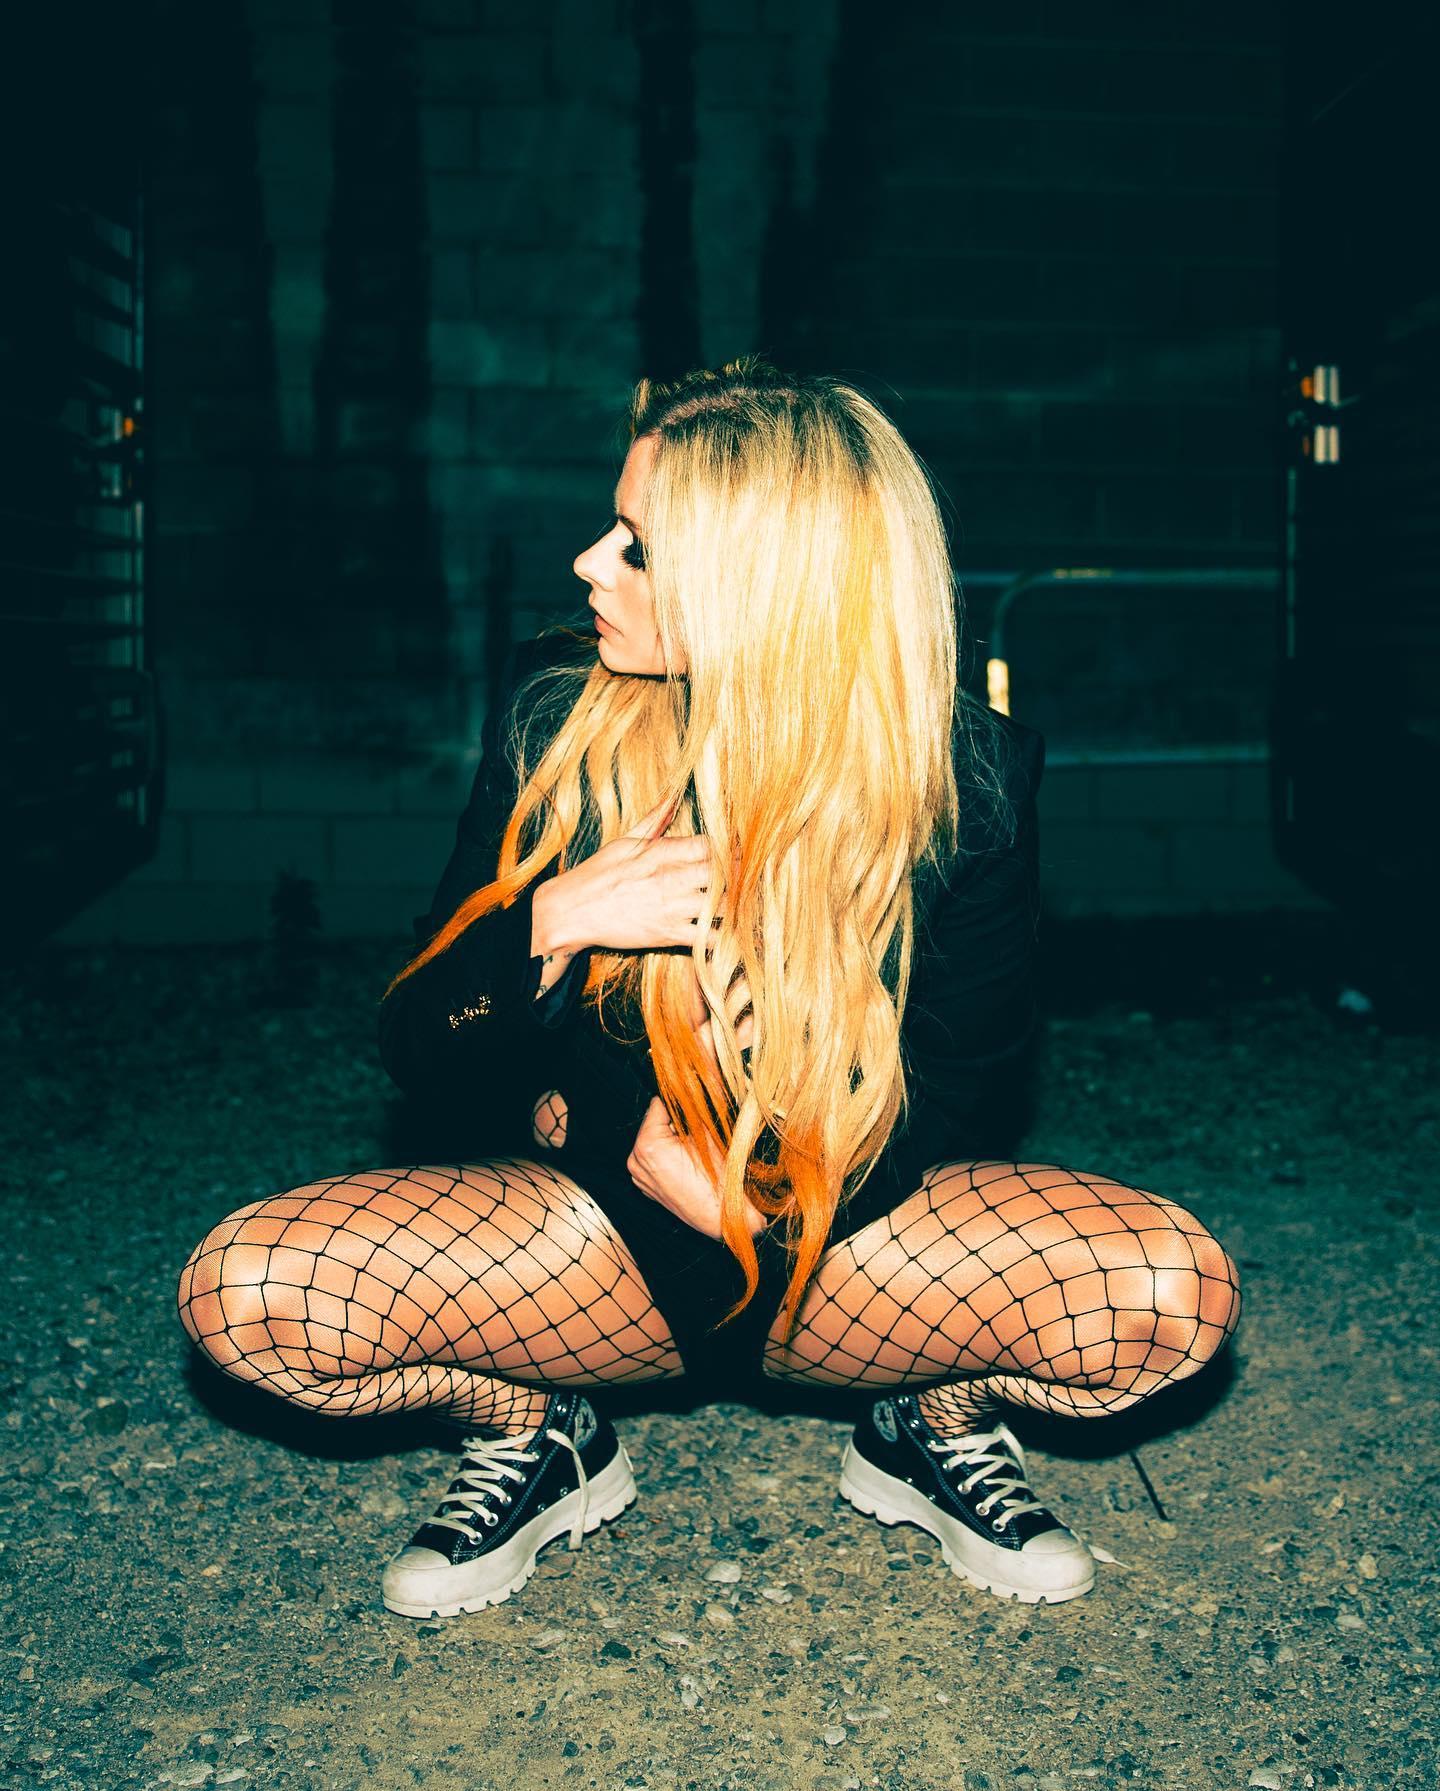 Avril Lavigne Poses Braless Underneath A Black Jacket